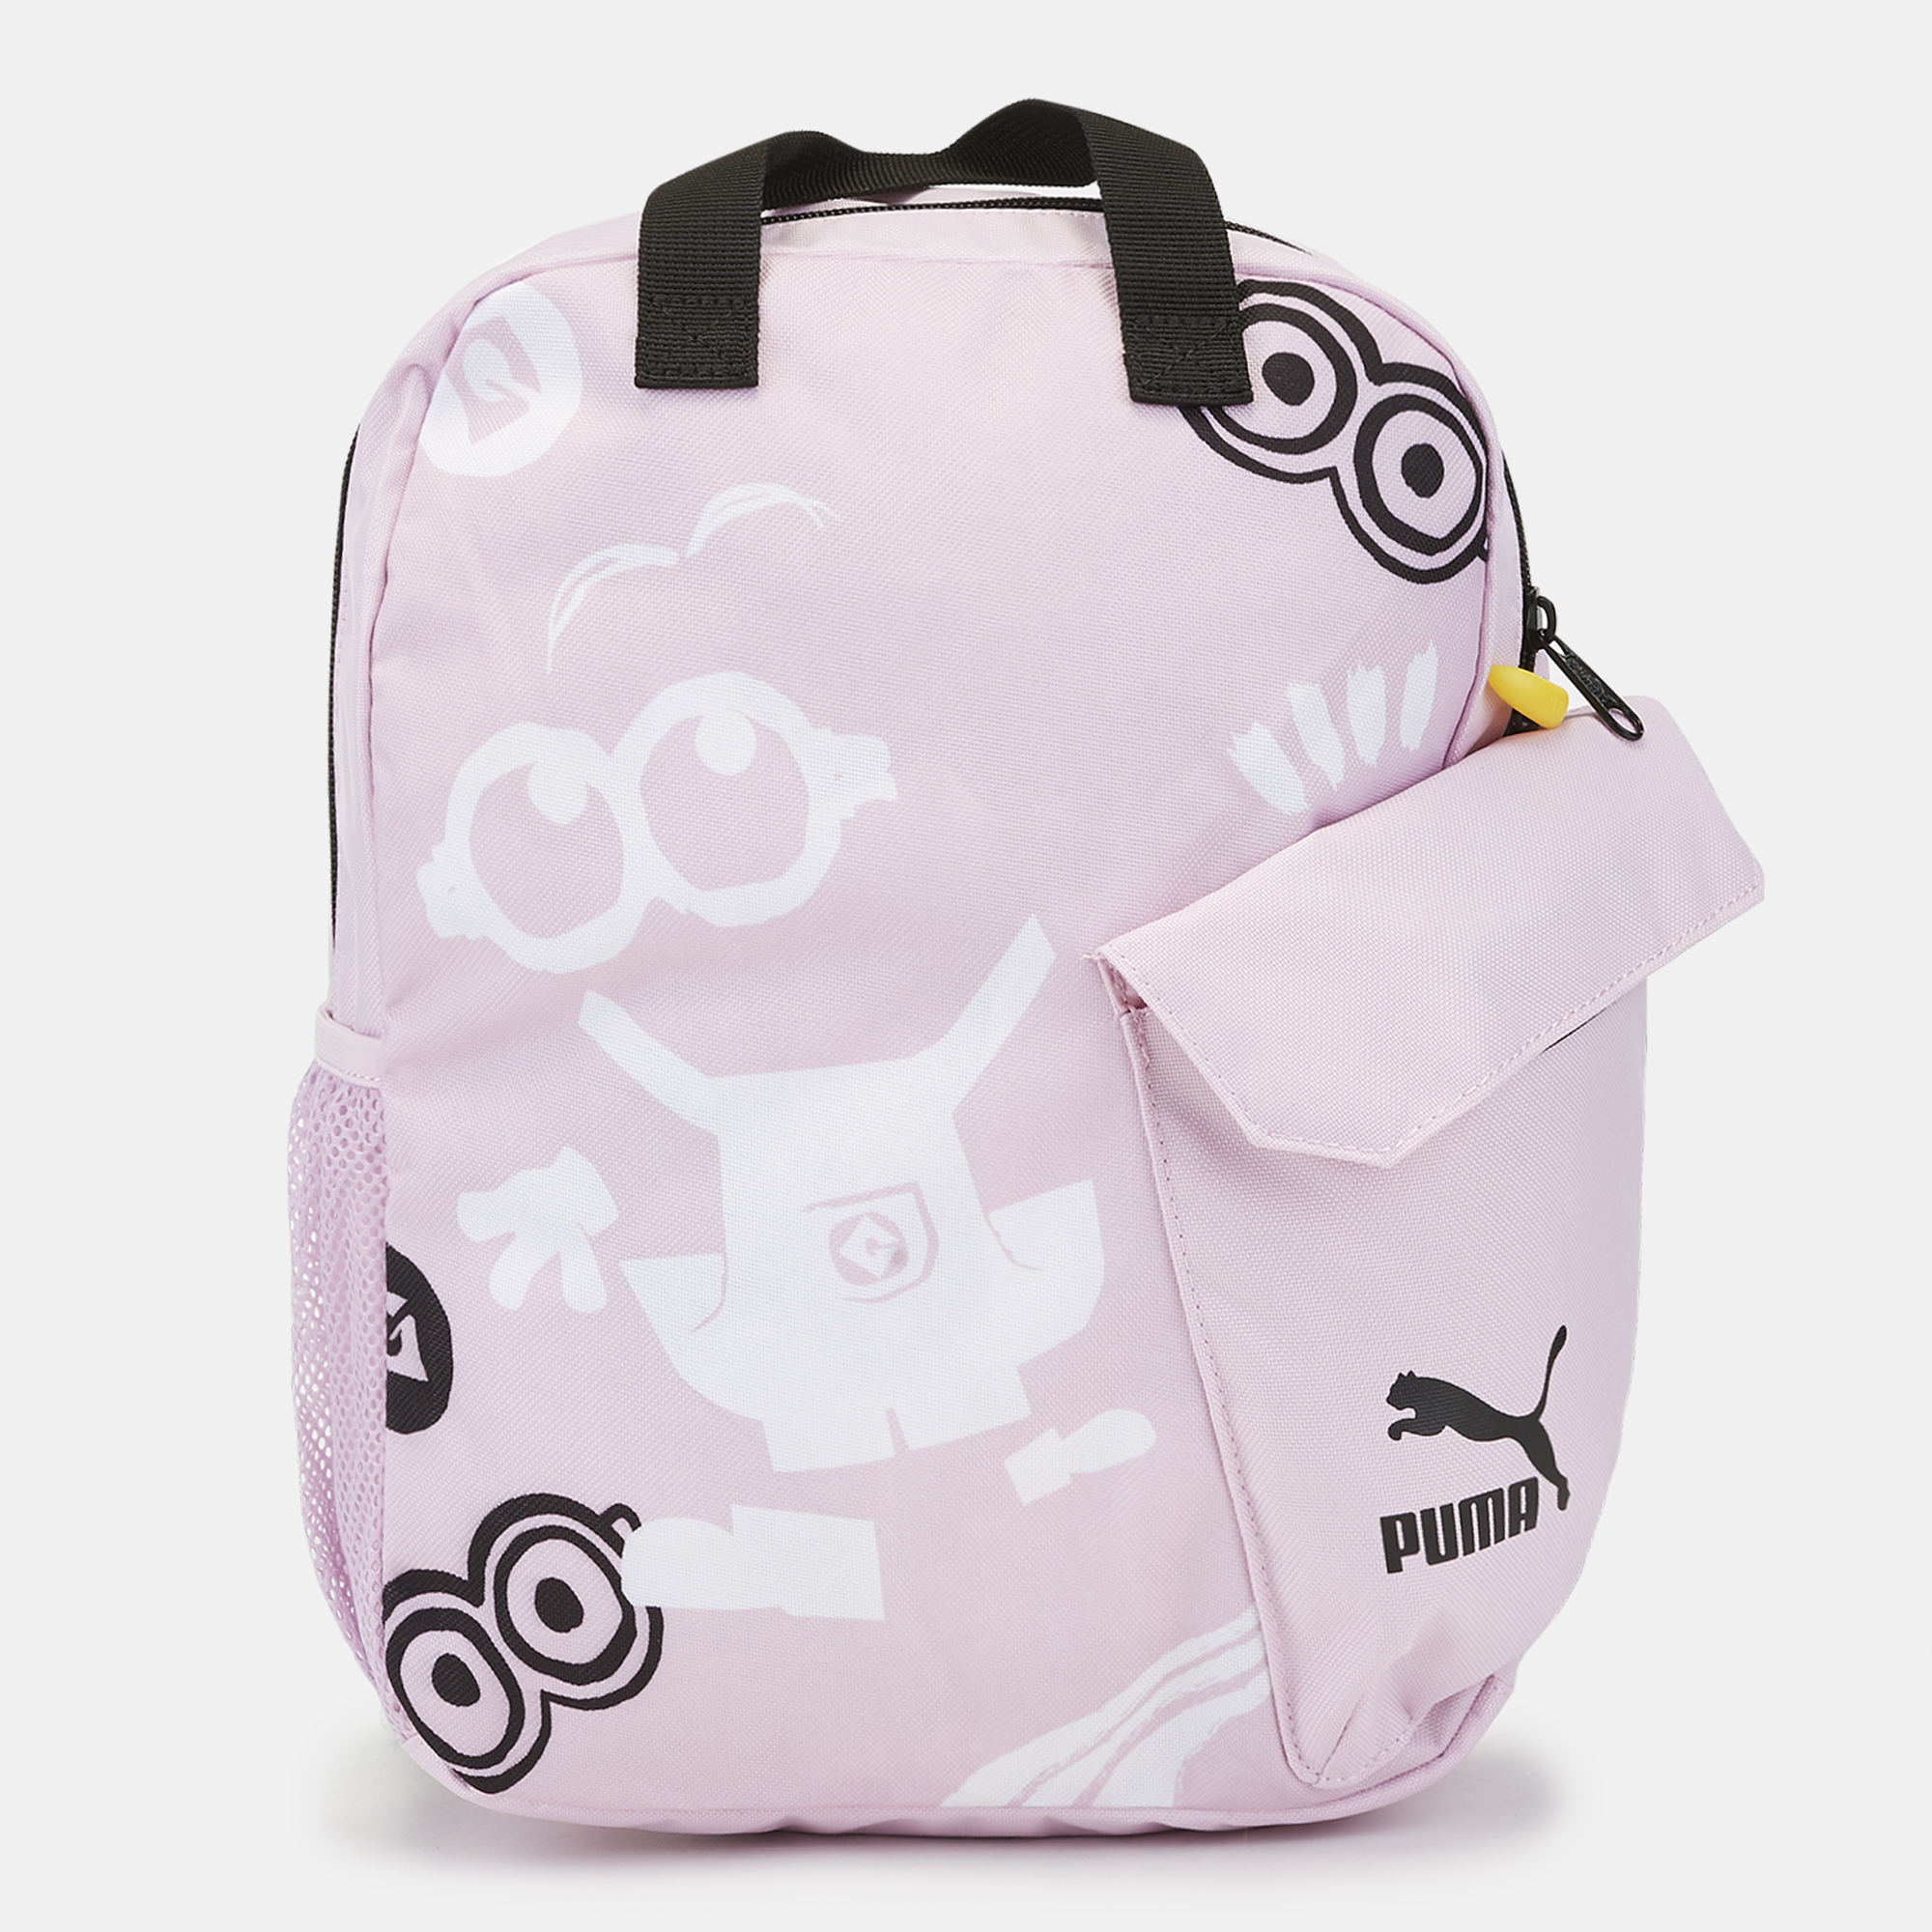 puma x minions backpack